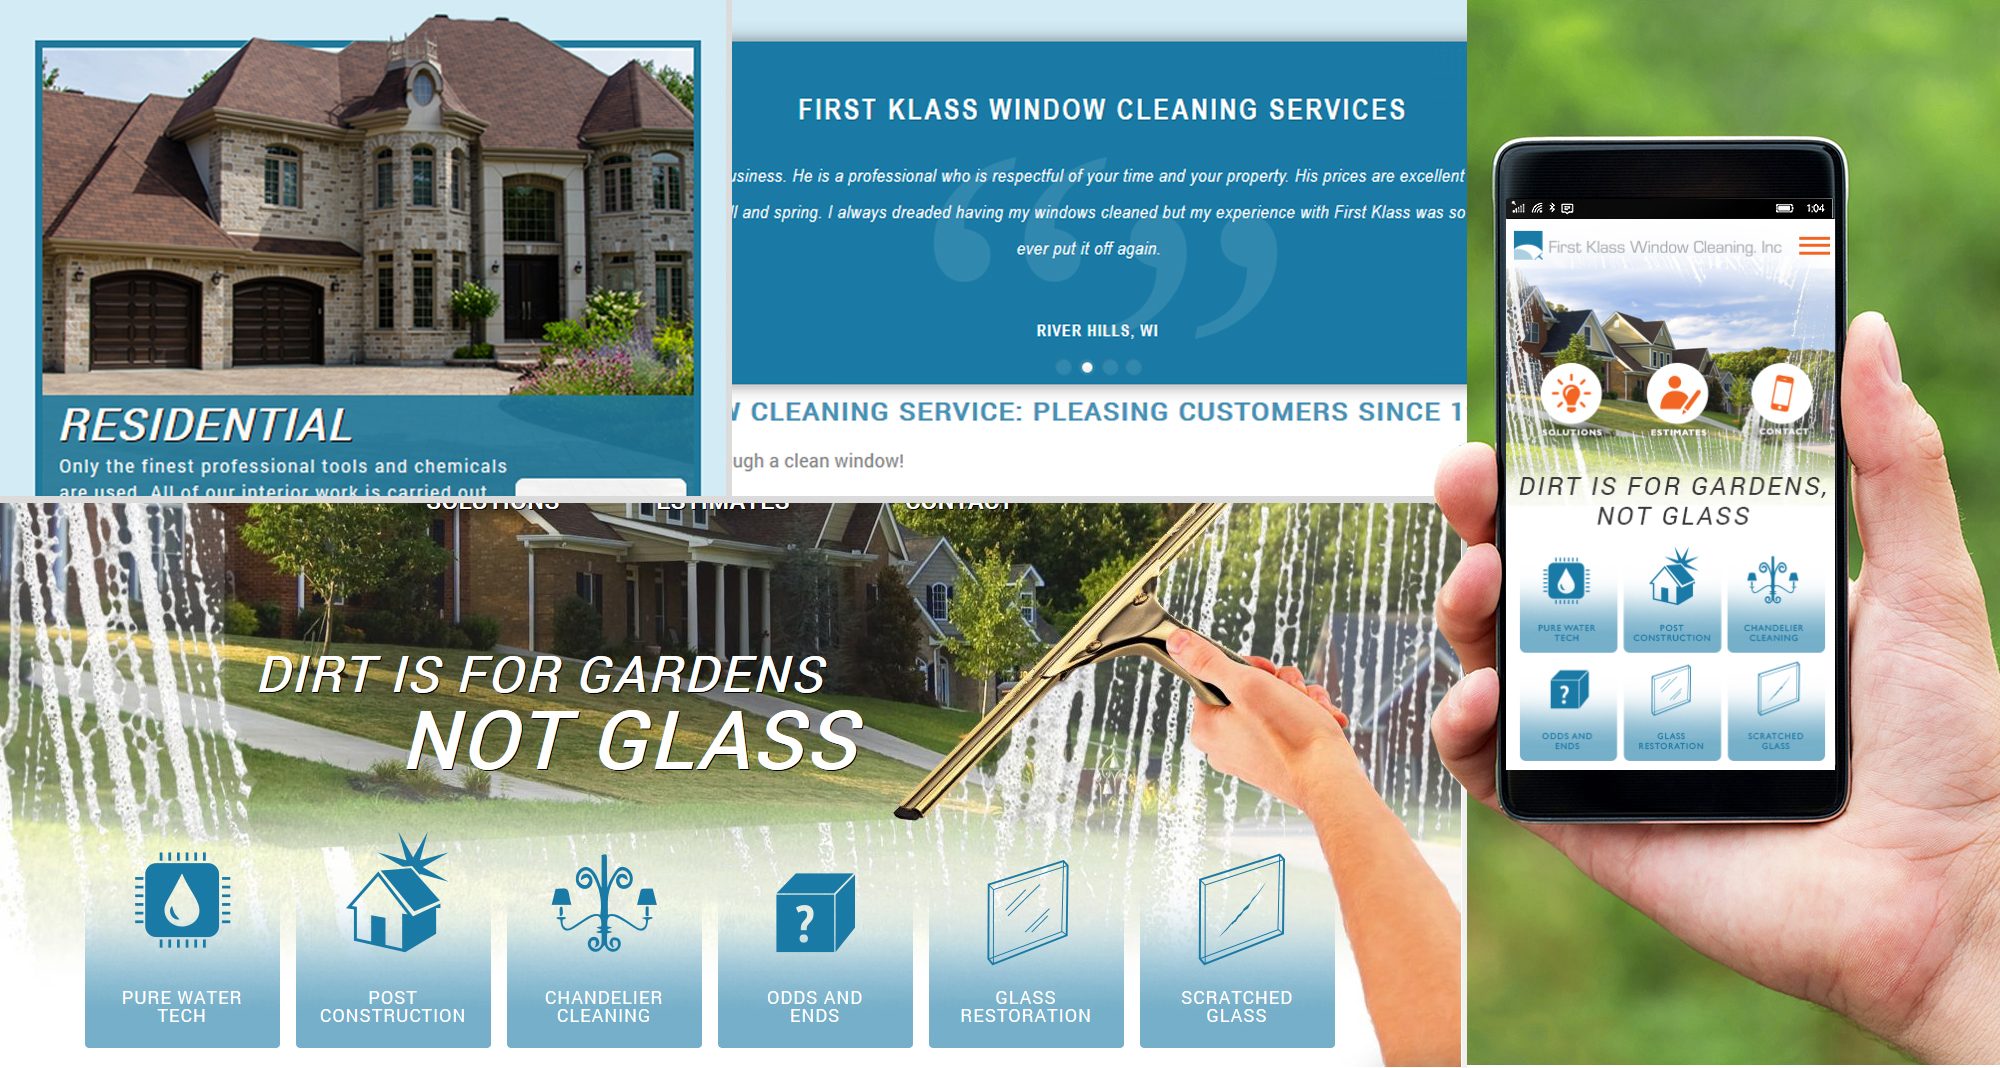 Milwaukee web marketing for First Klass Window Cleaning, Inc.